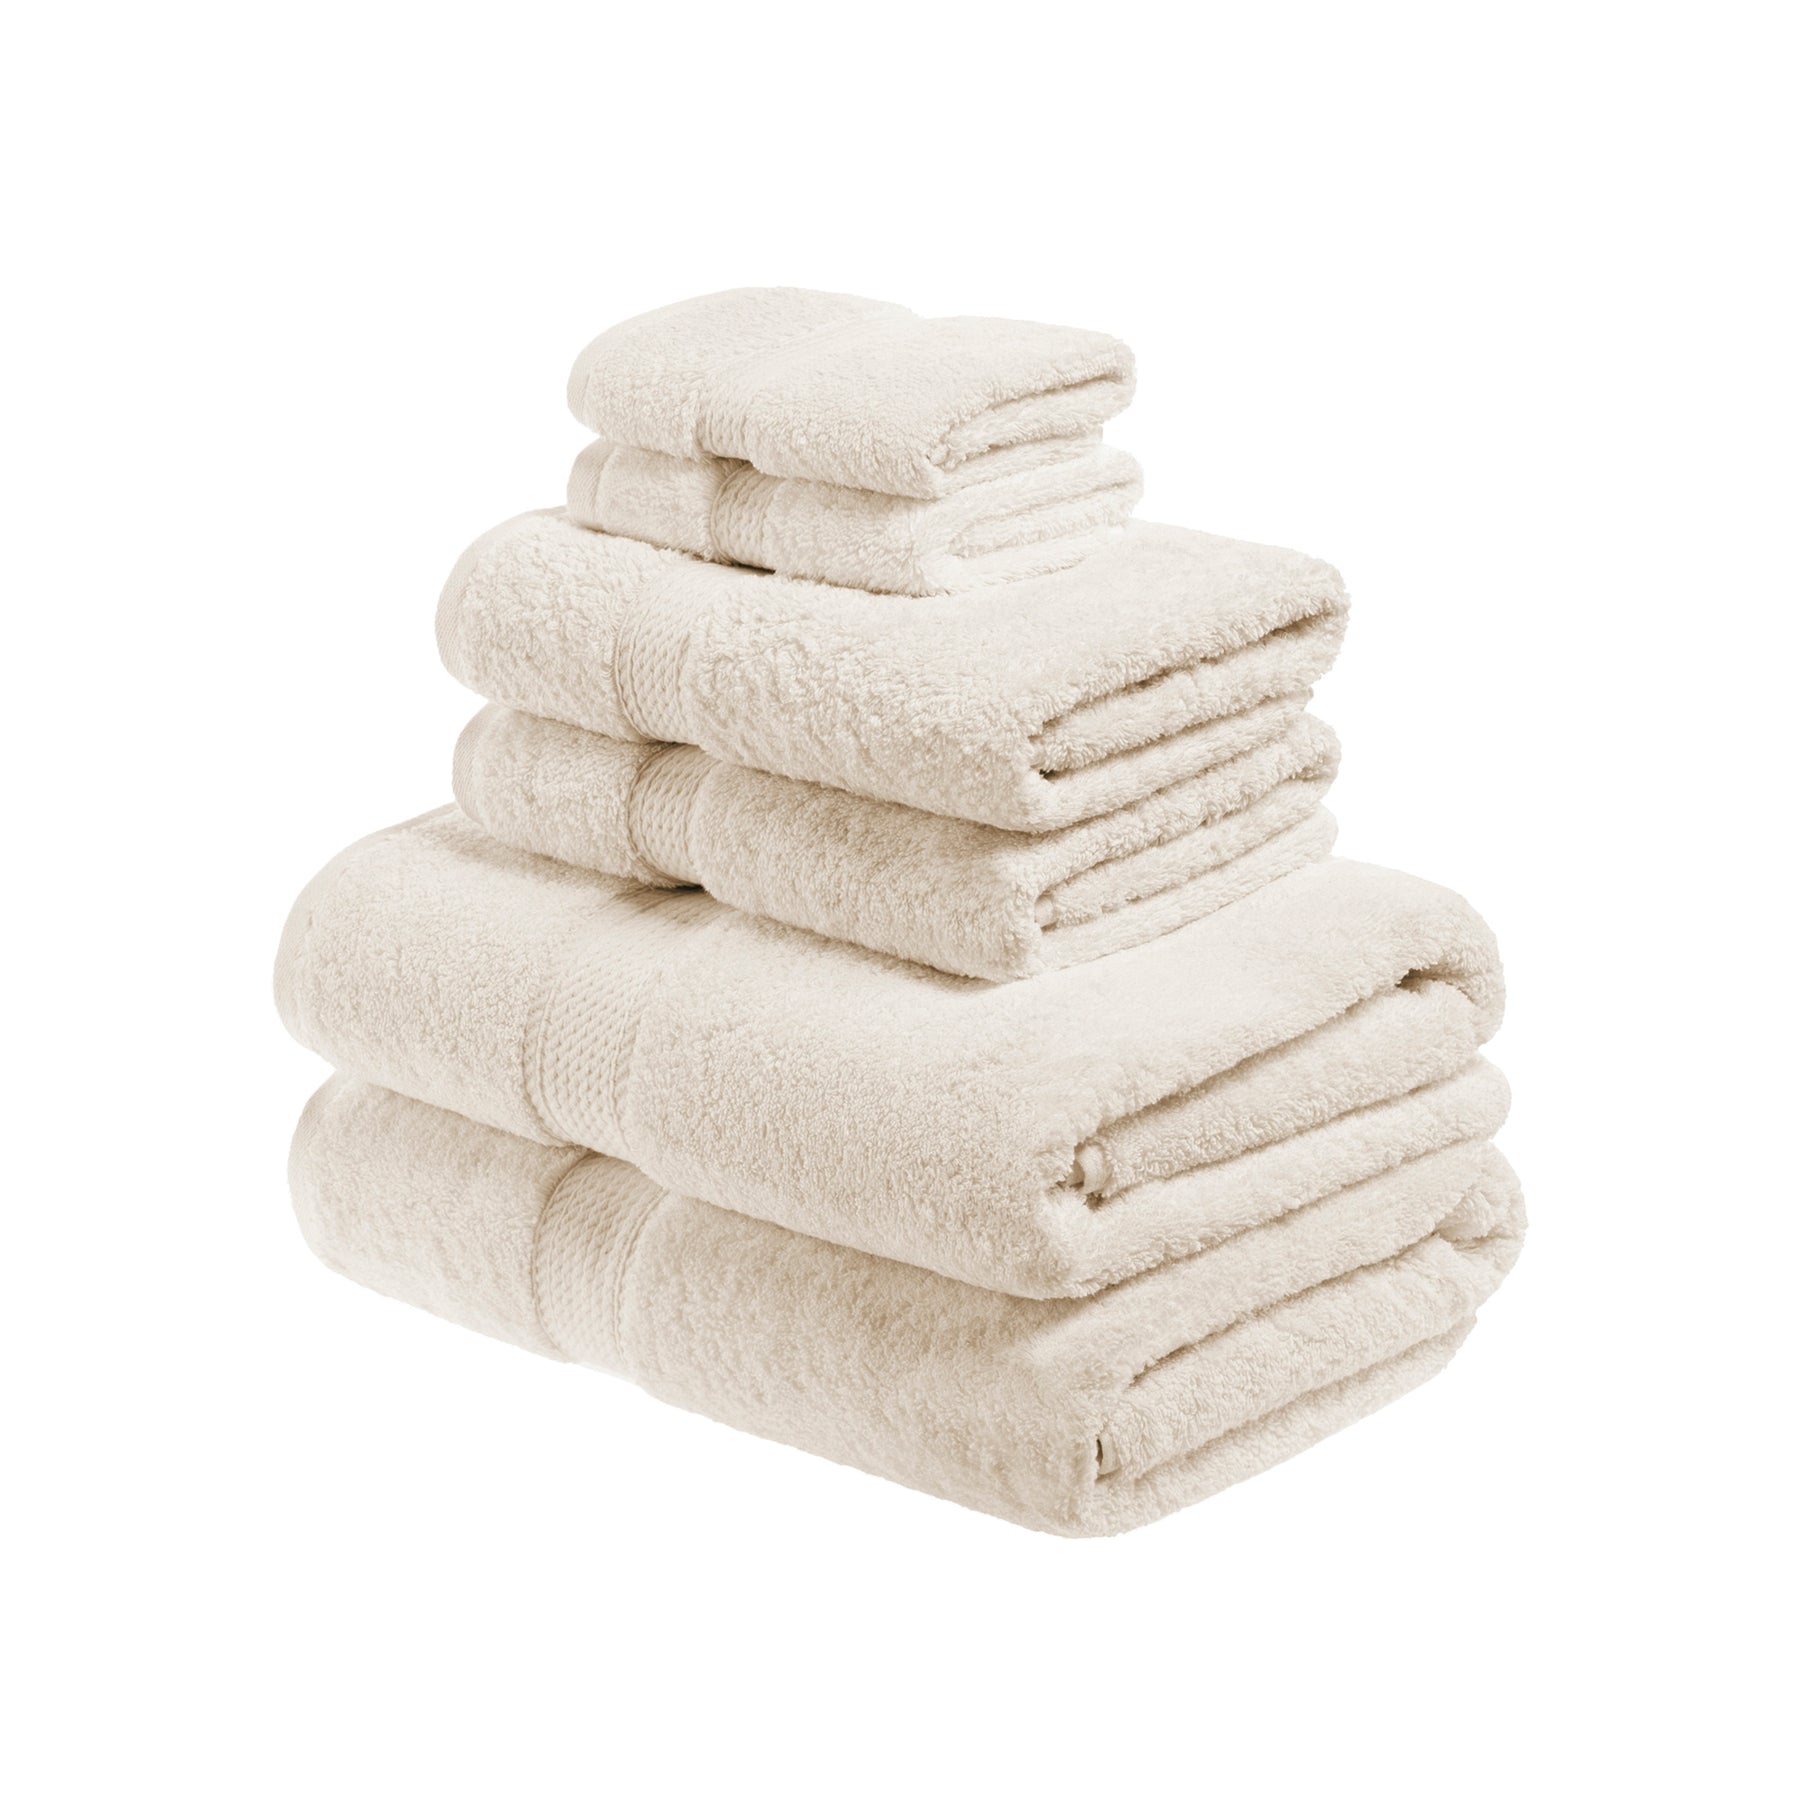 Wamsutta Egyptian Cotton Towel Set of 6 (Seaglass)